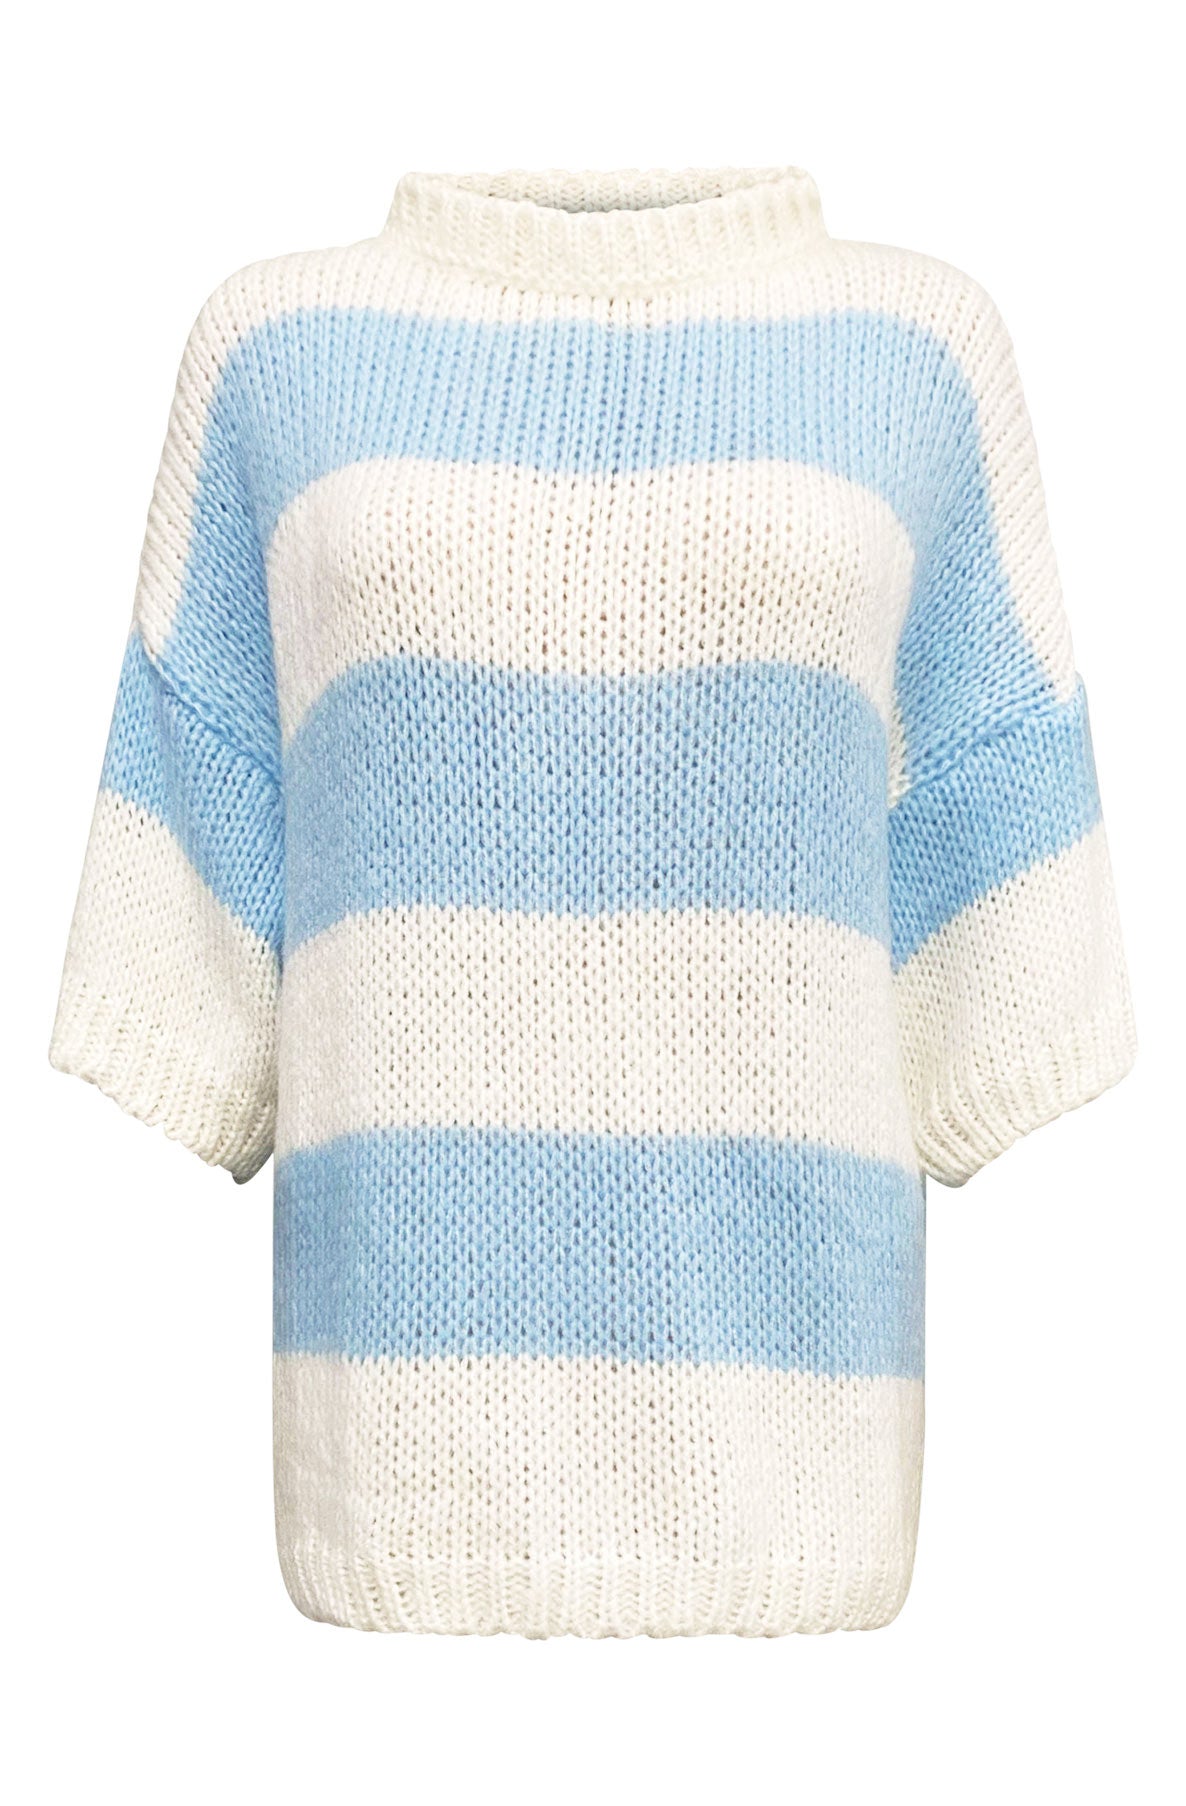 Binka Striped Knitted Jumper Sweater Top-Blue